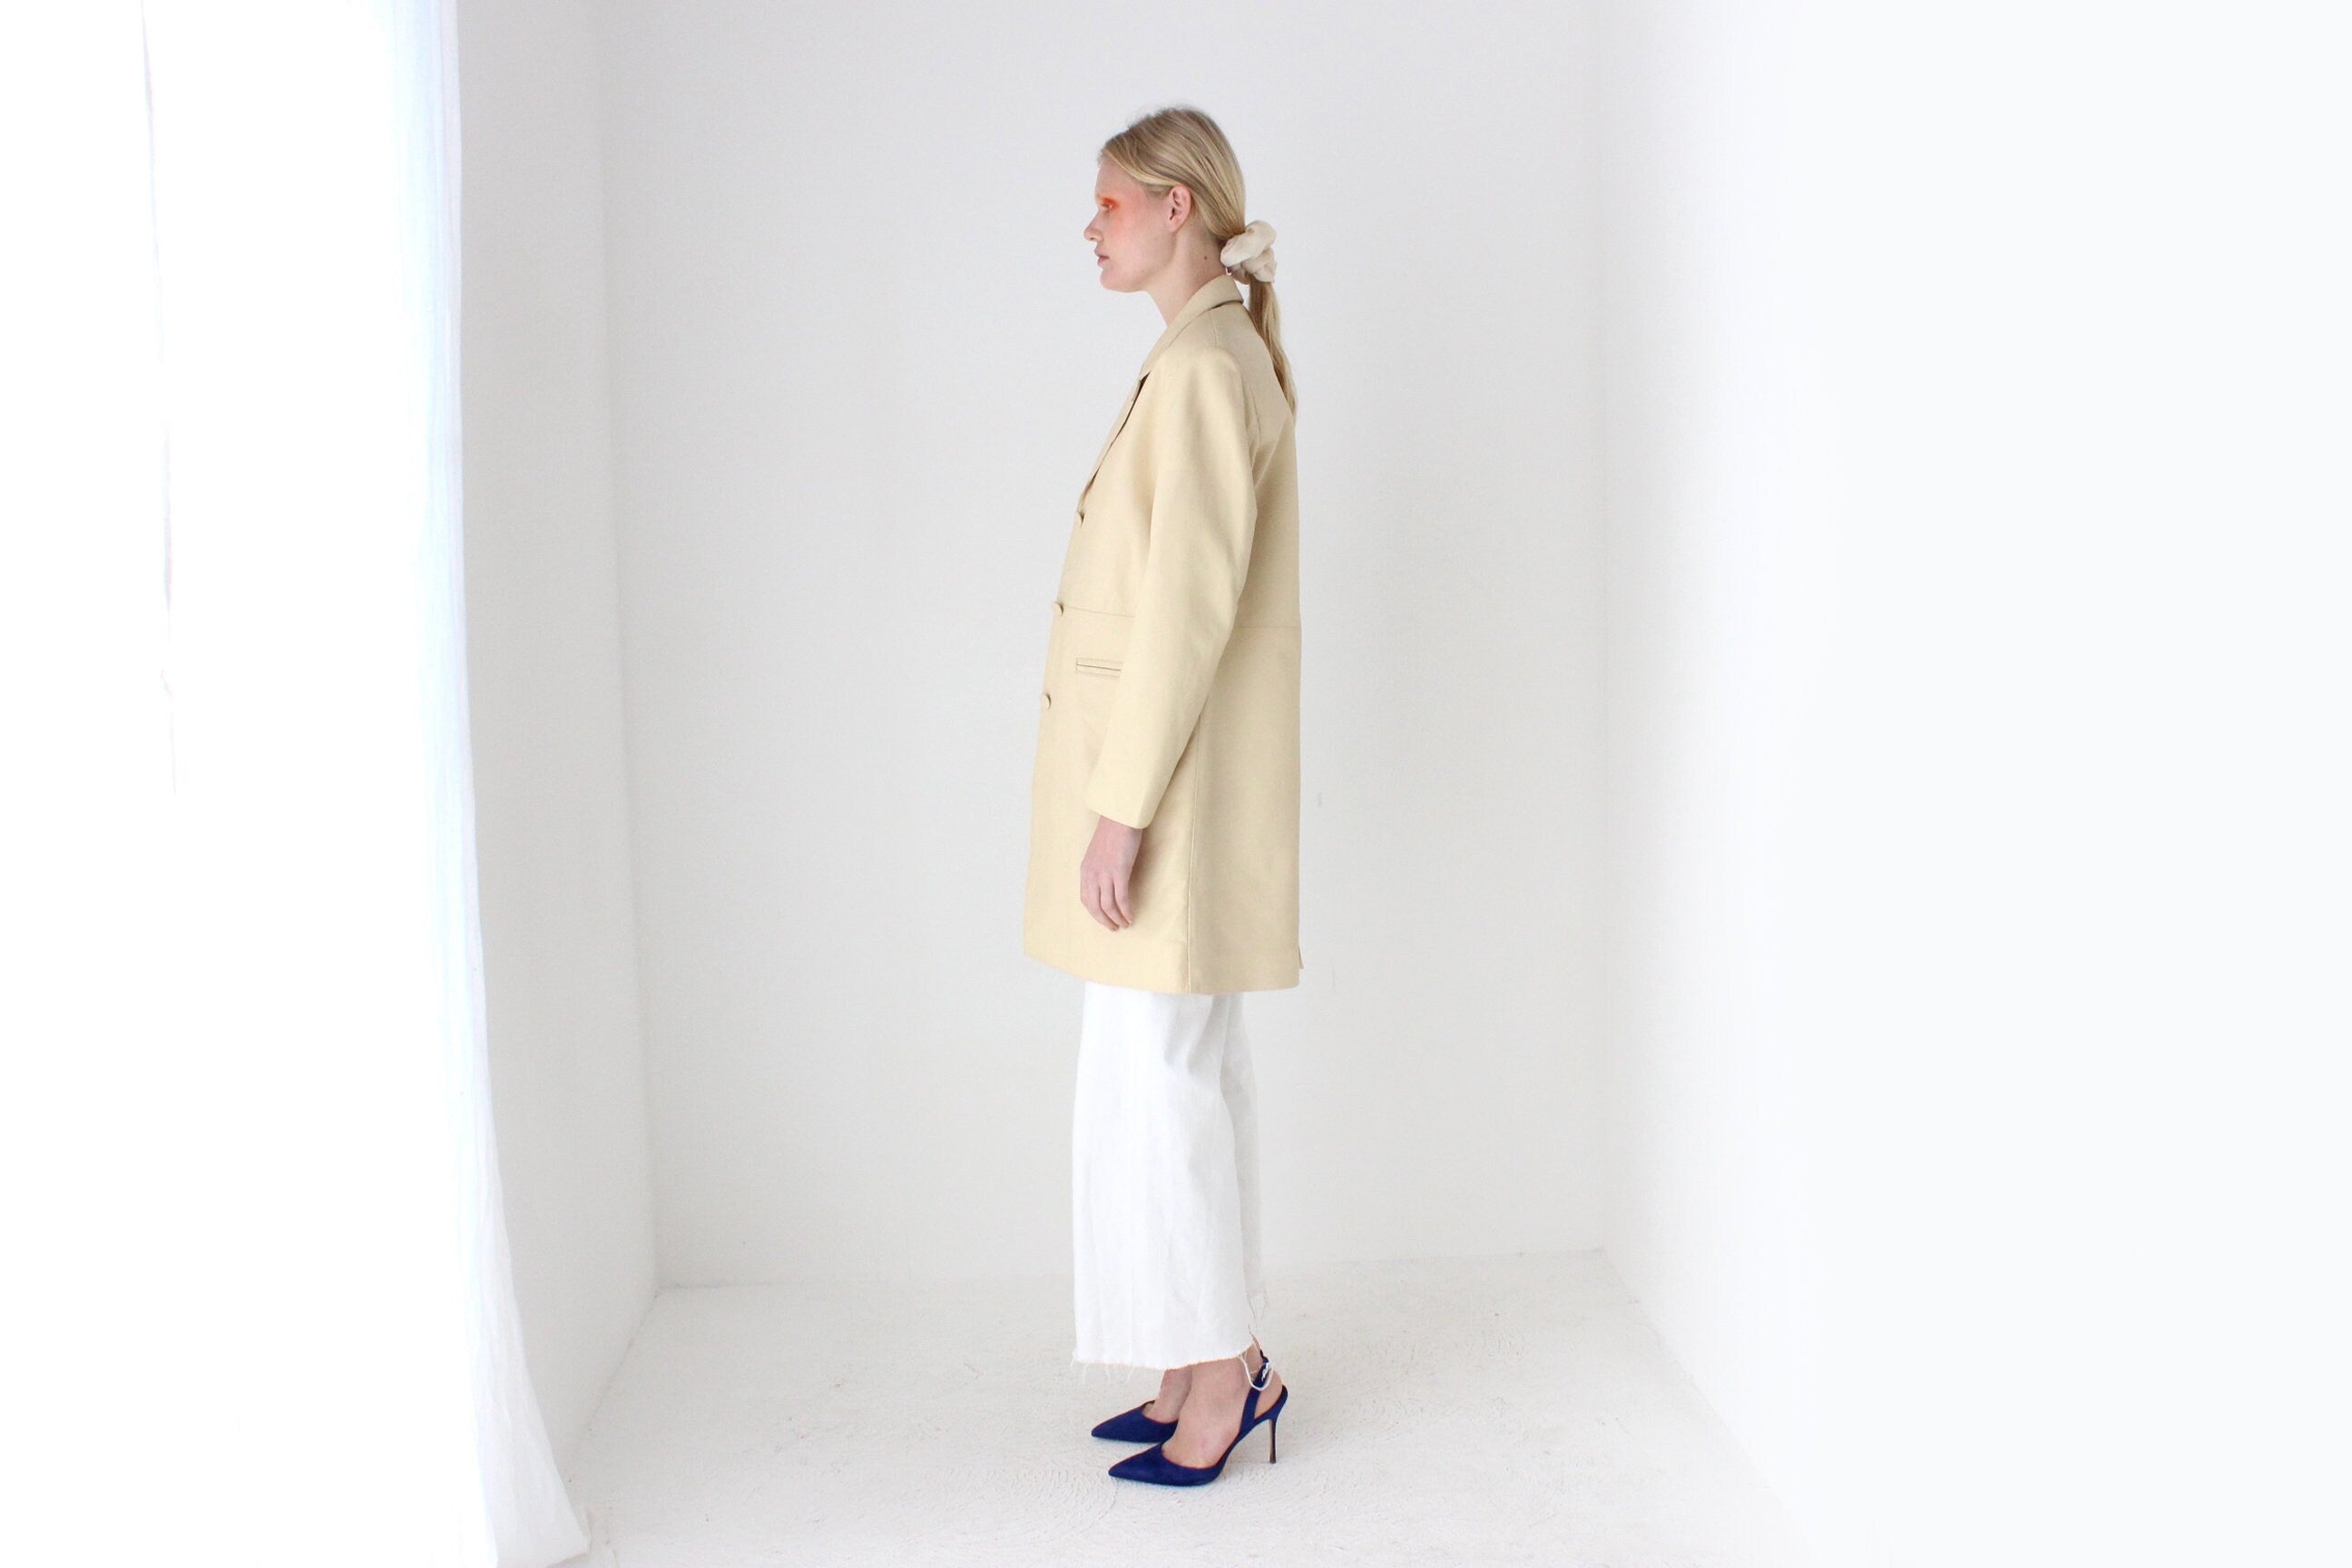 Sleek, Minimal 90s {Real Leather} Custom Made Ecru Cream Long Coat